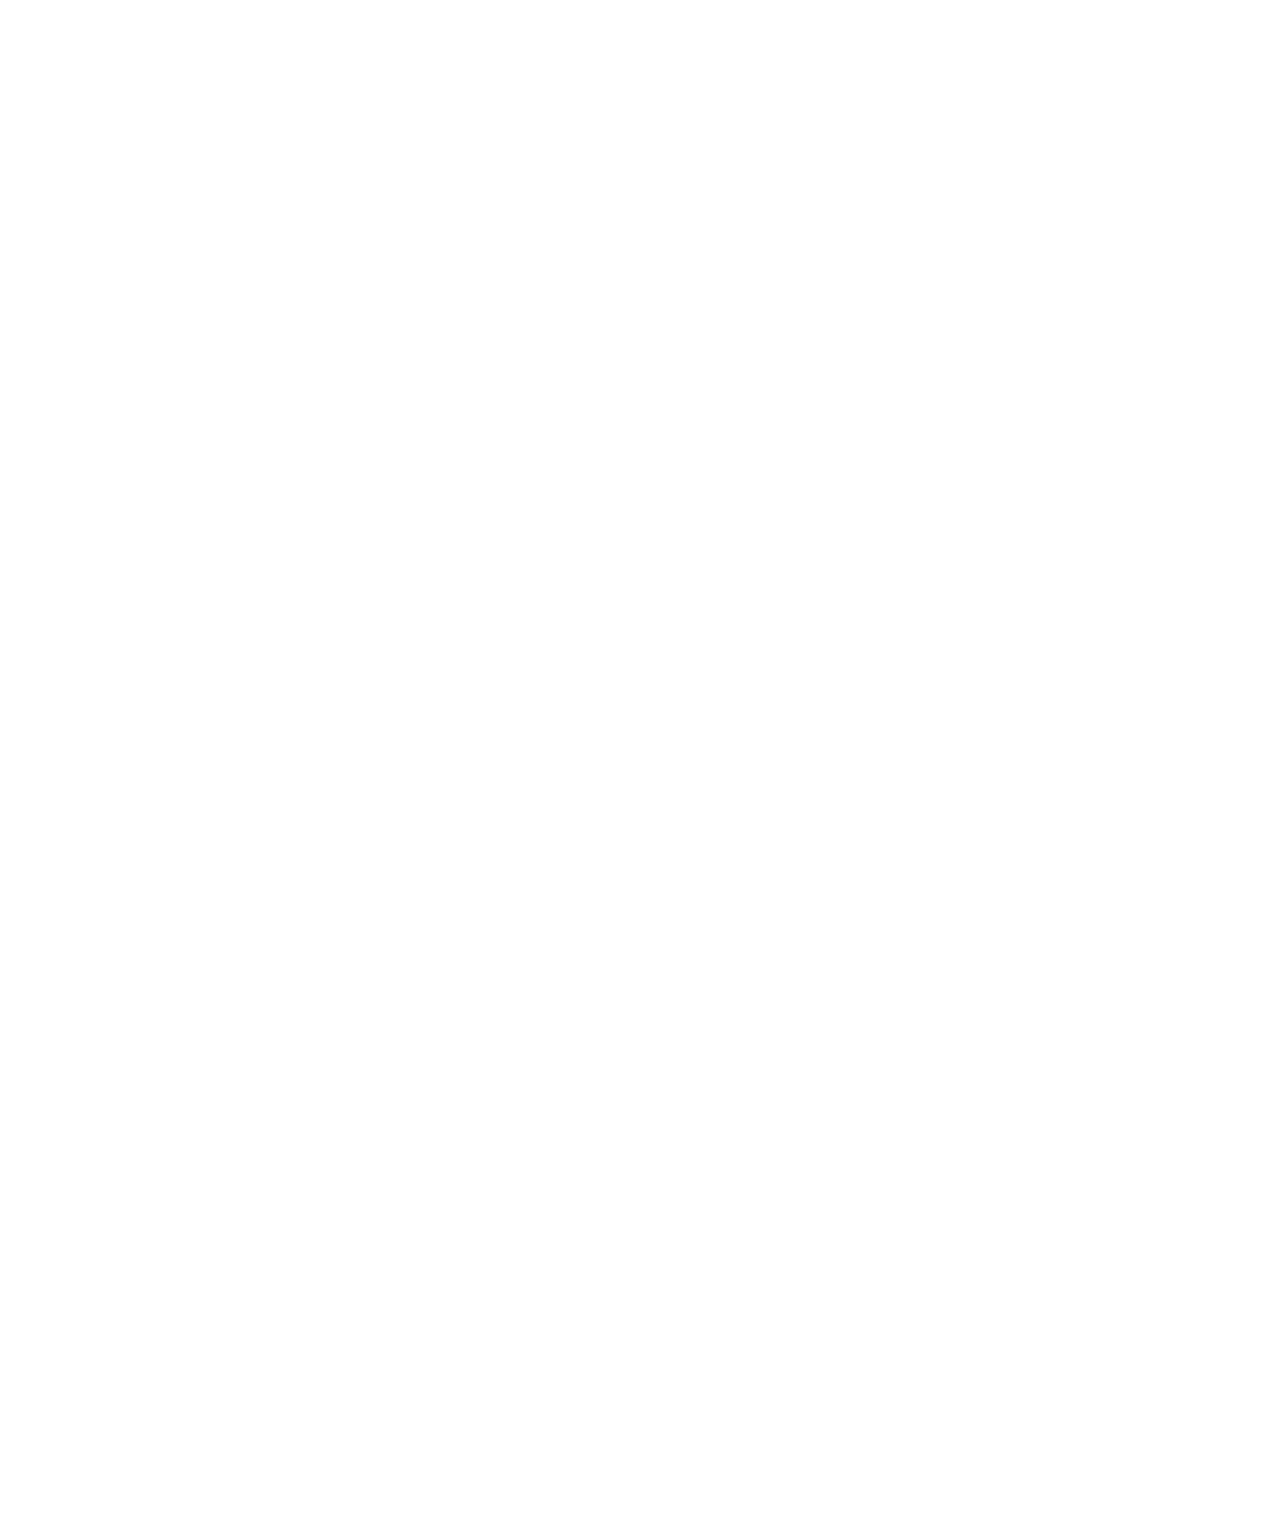 JOOARIS's logo